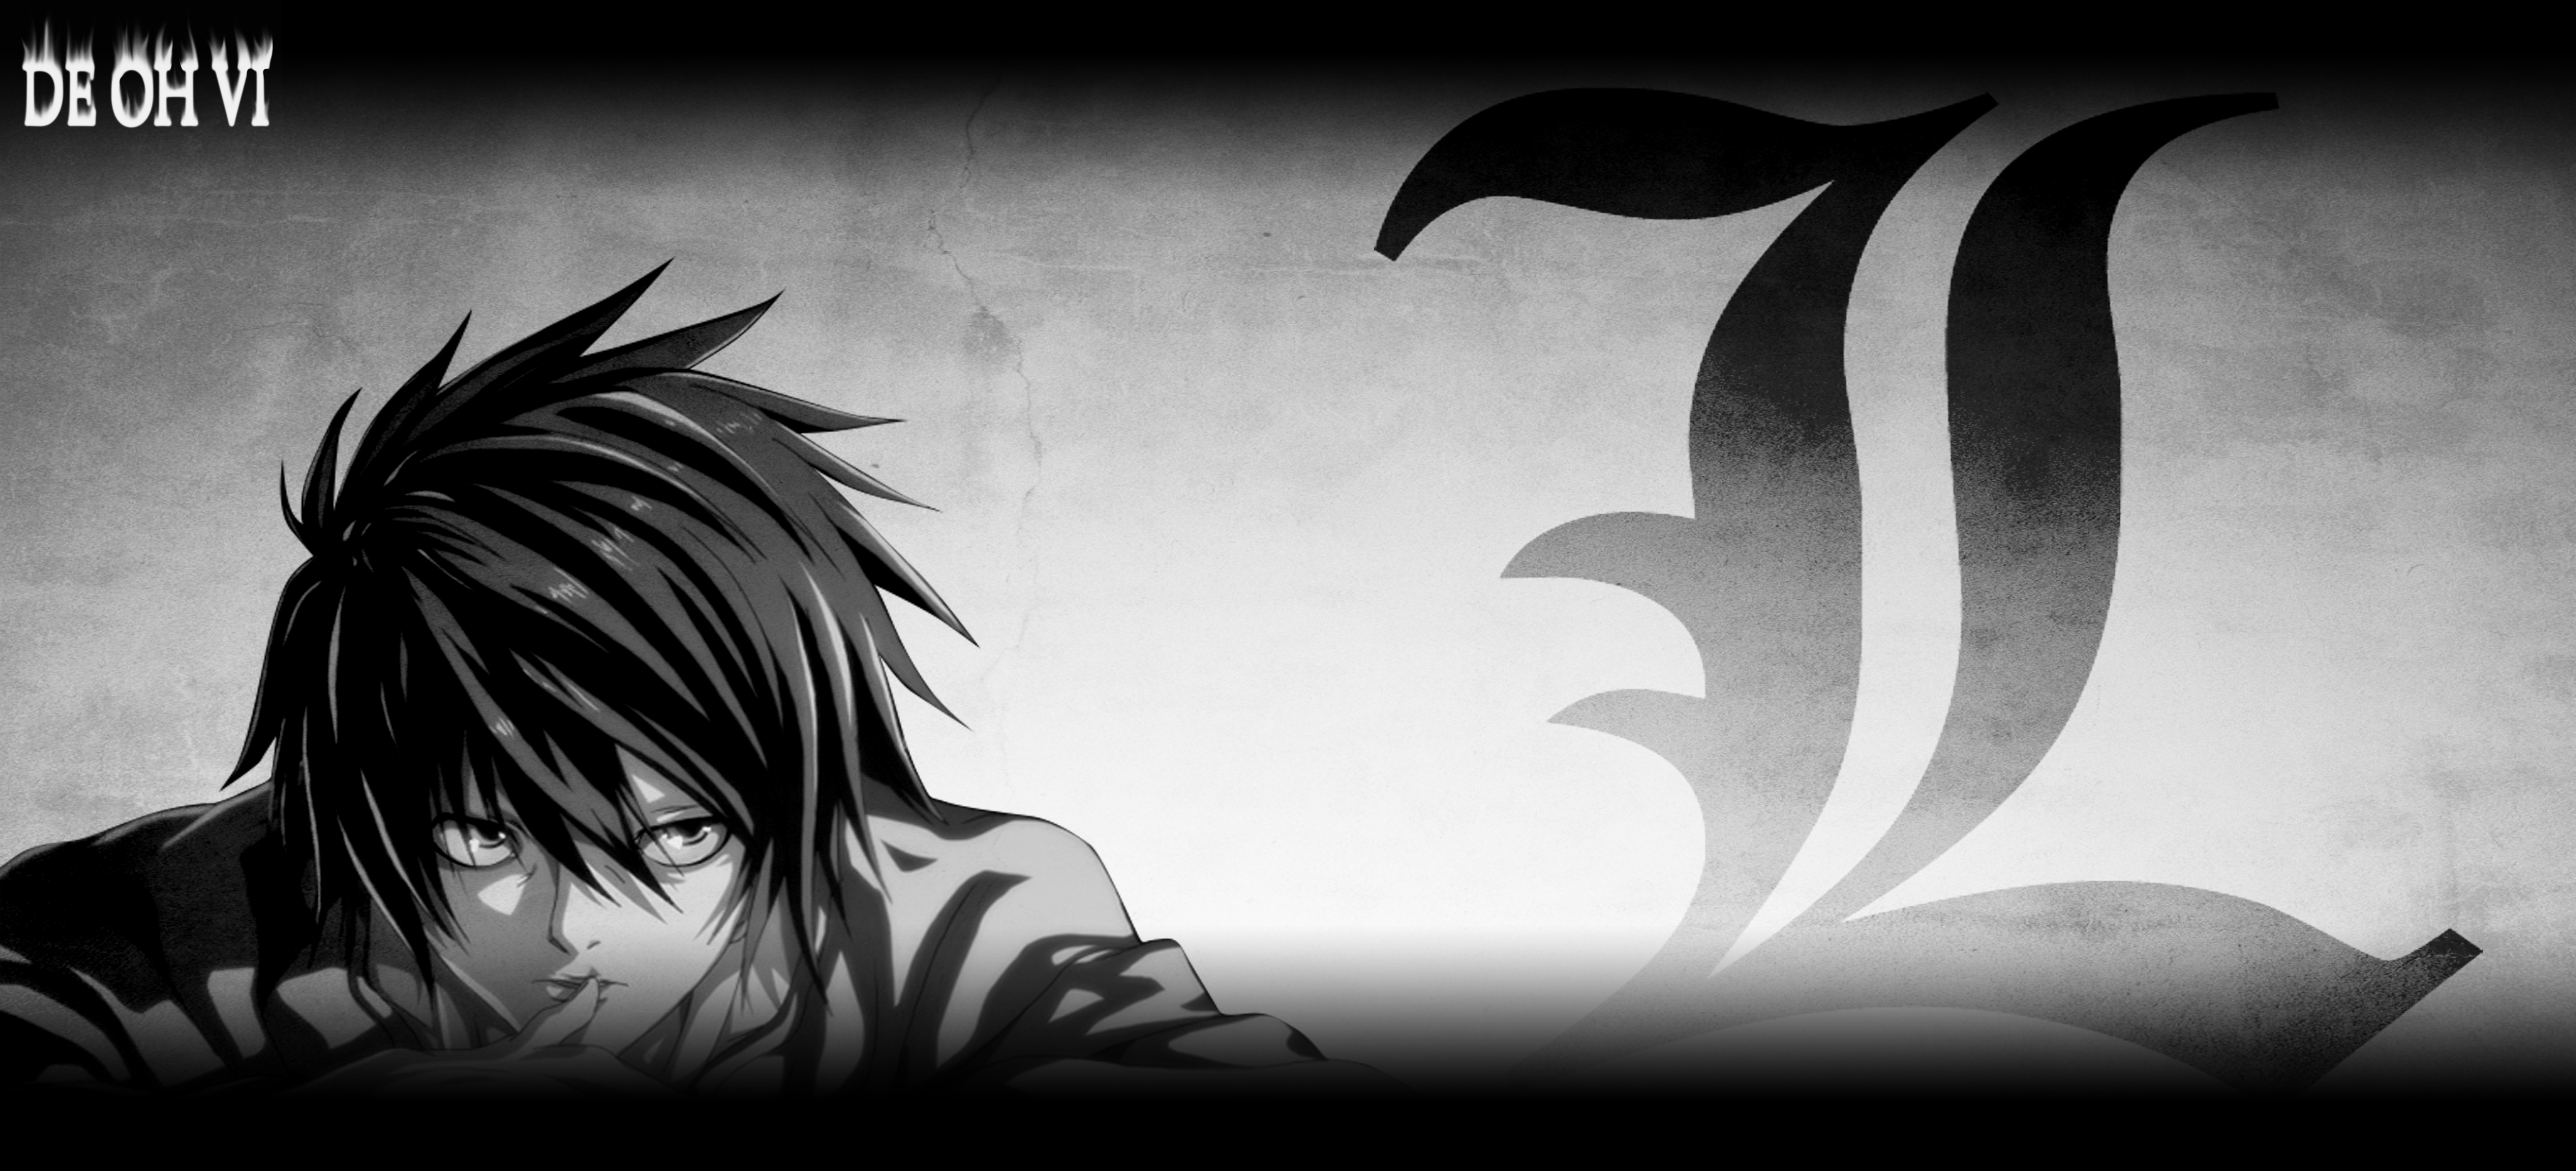 Ryuzaki Death Note Wallpapers